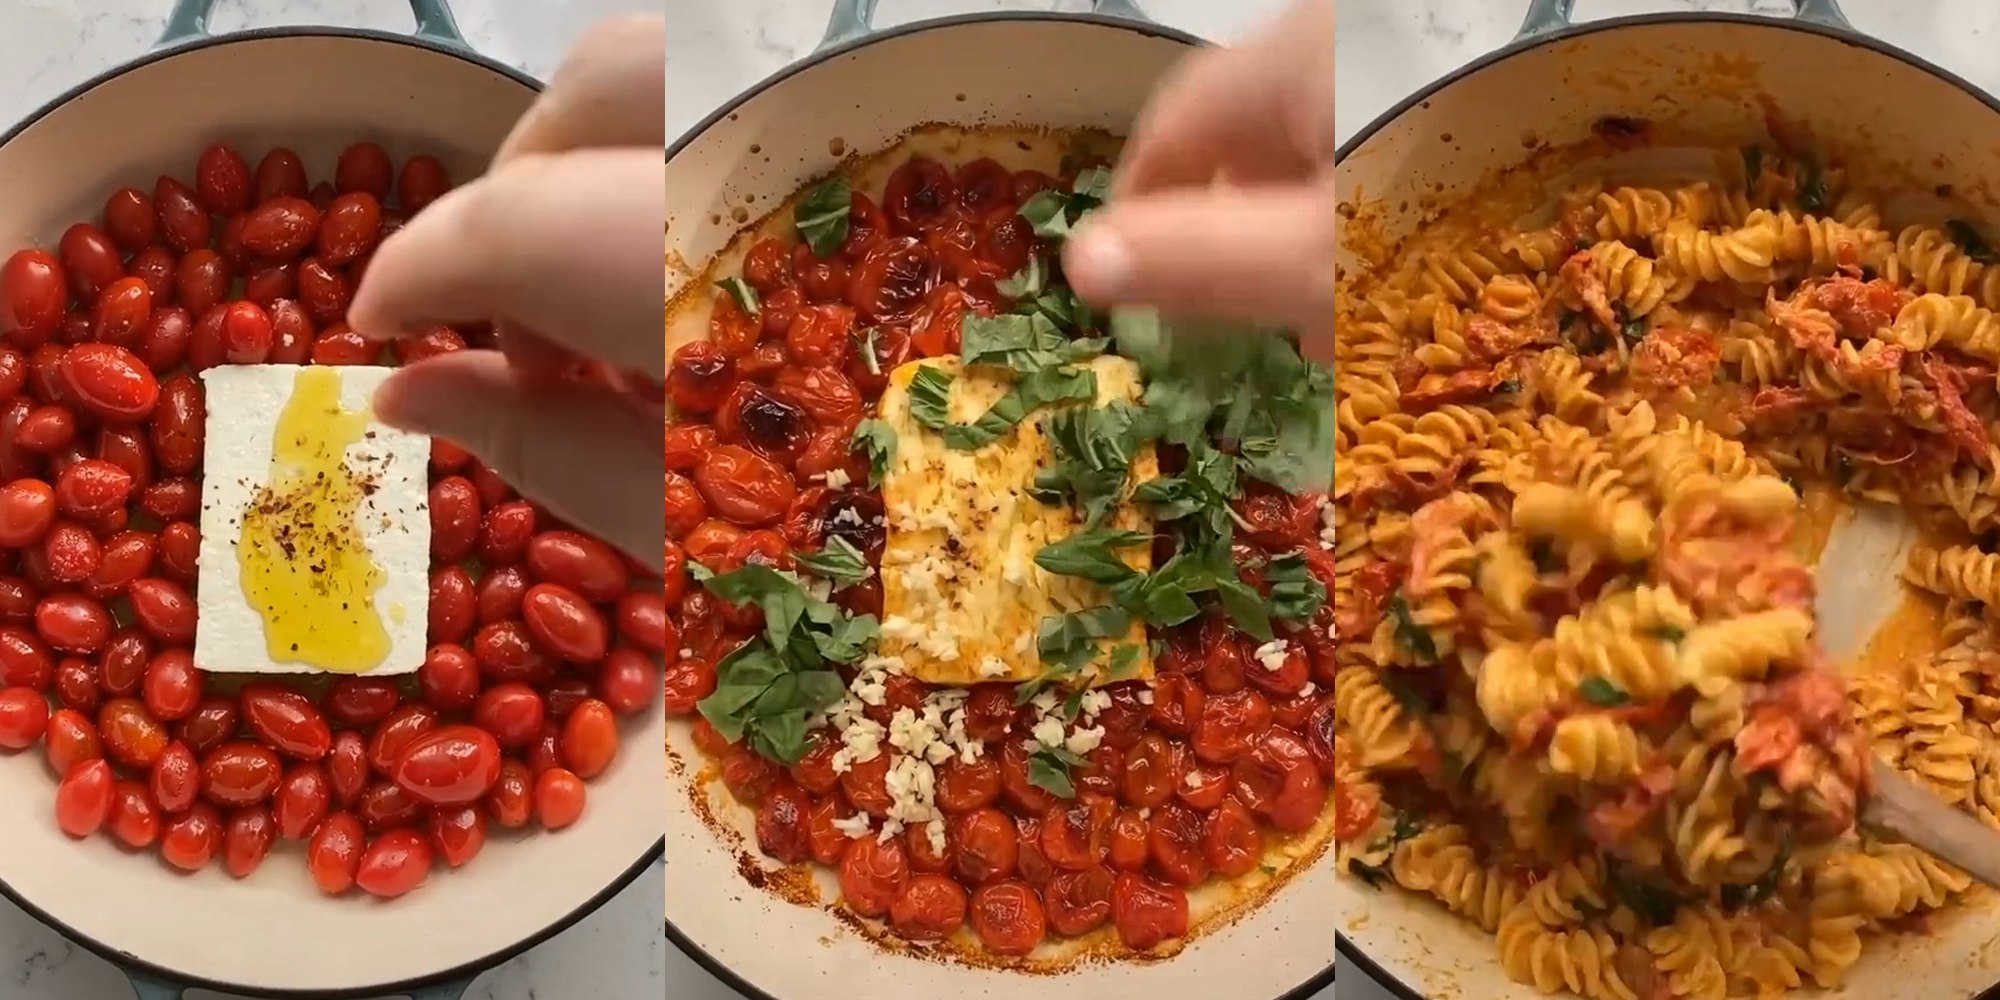 woman making a "baked feta pasta" dish